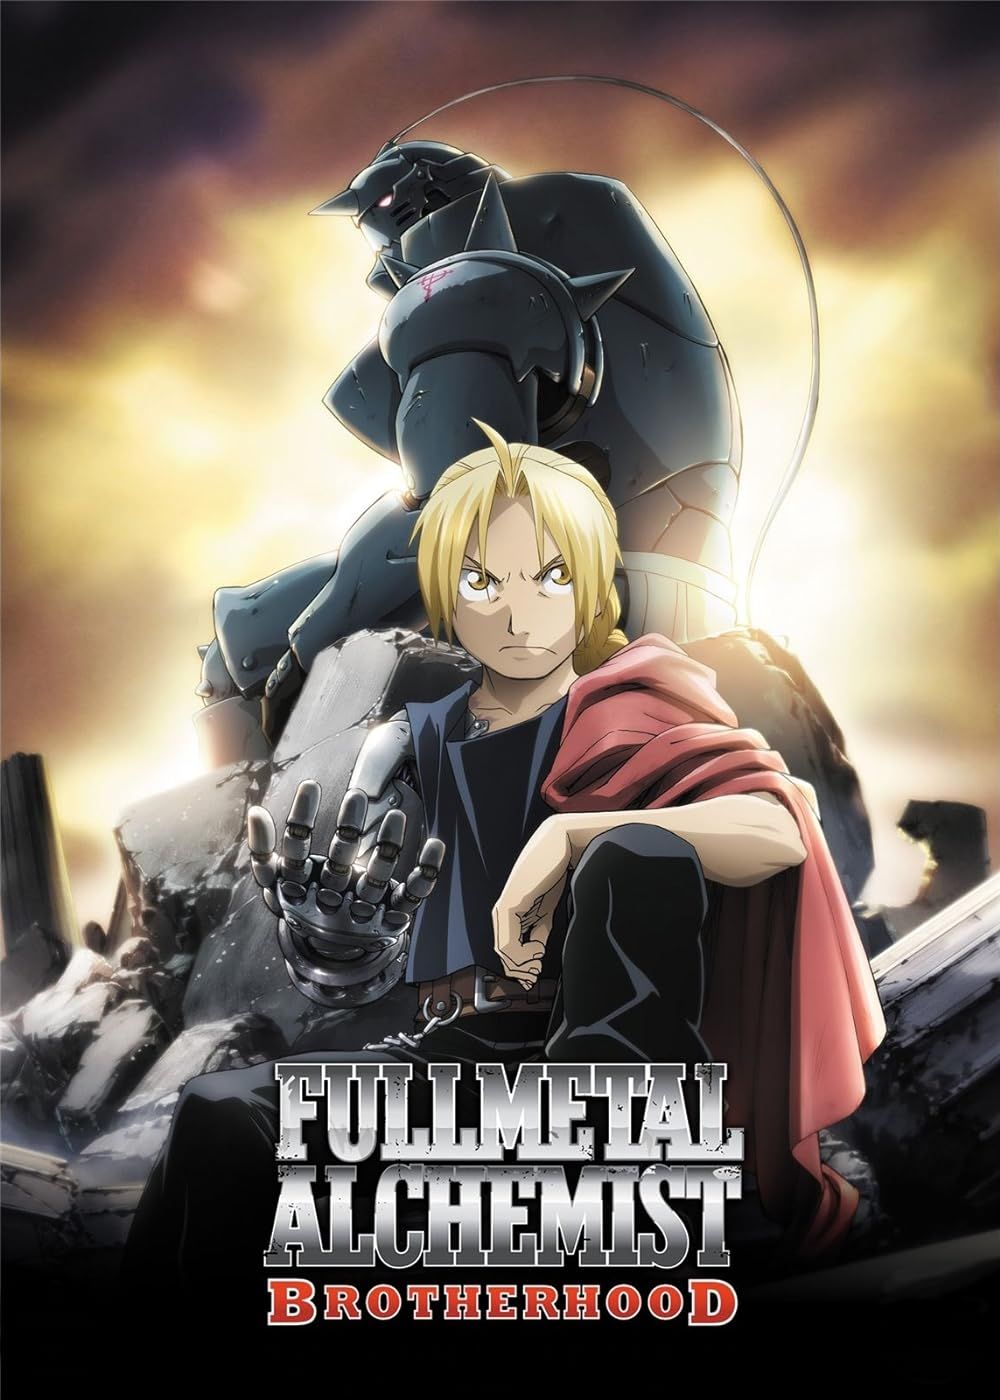 fullmetal alchemist: brotherhood loses no. 1 spot as highest-ranked anime